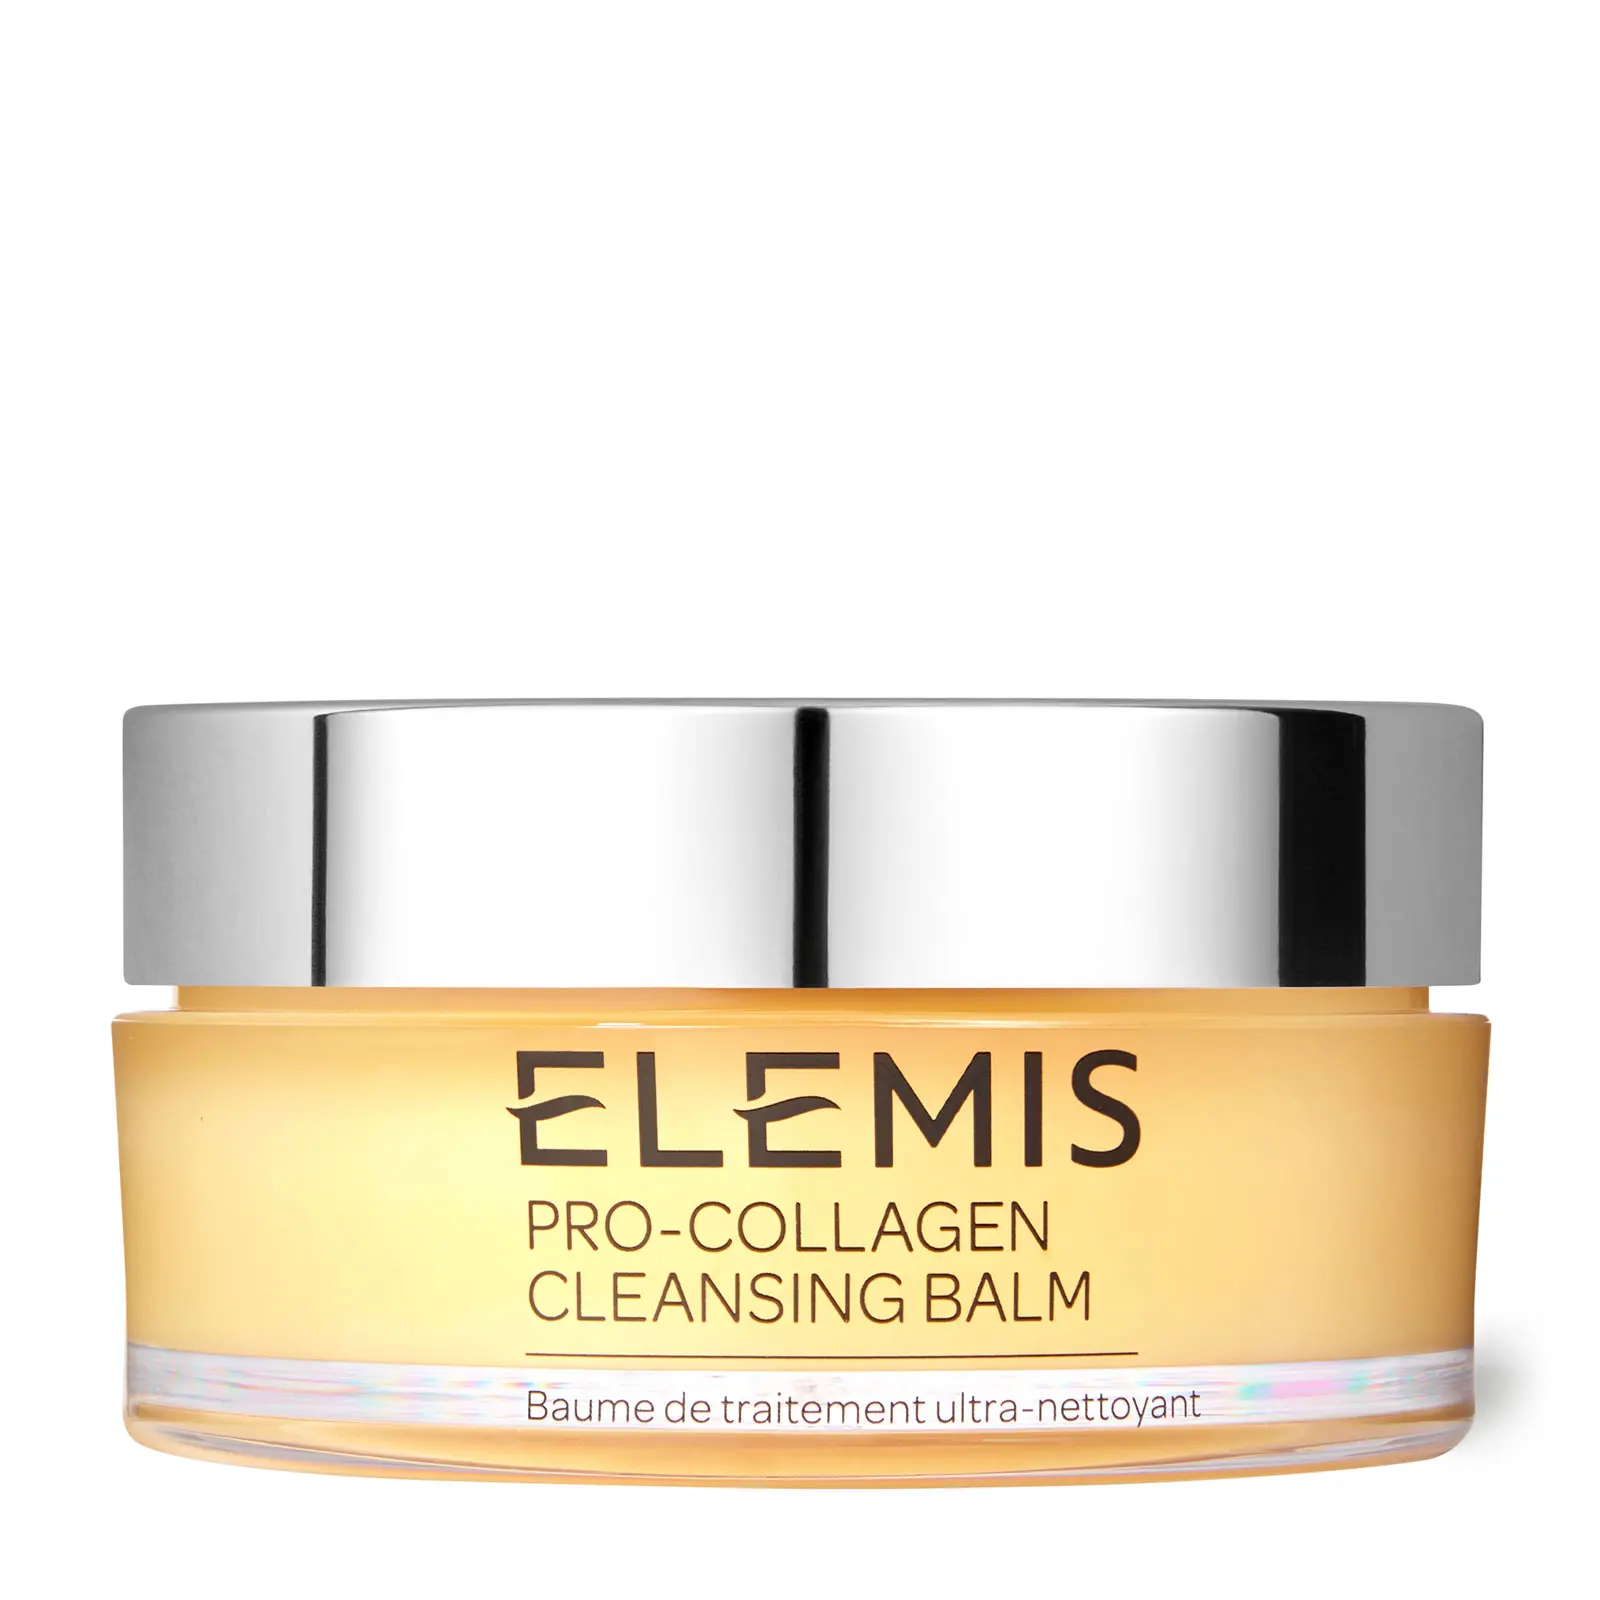 Elemis Men’s Pro-Collagen Cleansing Balm 20g Discounts and Cashback